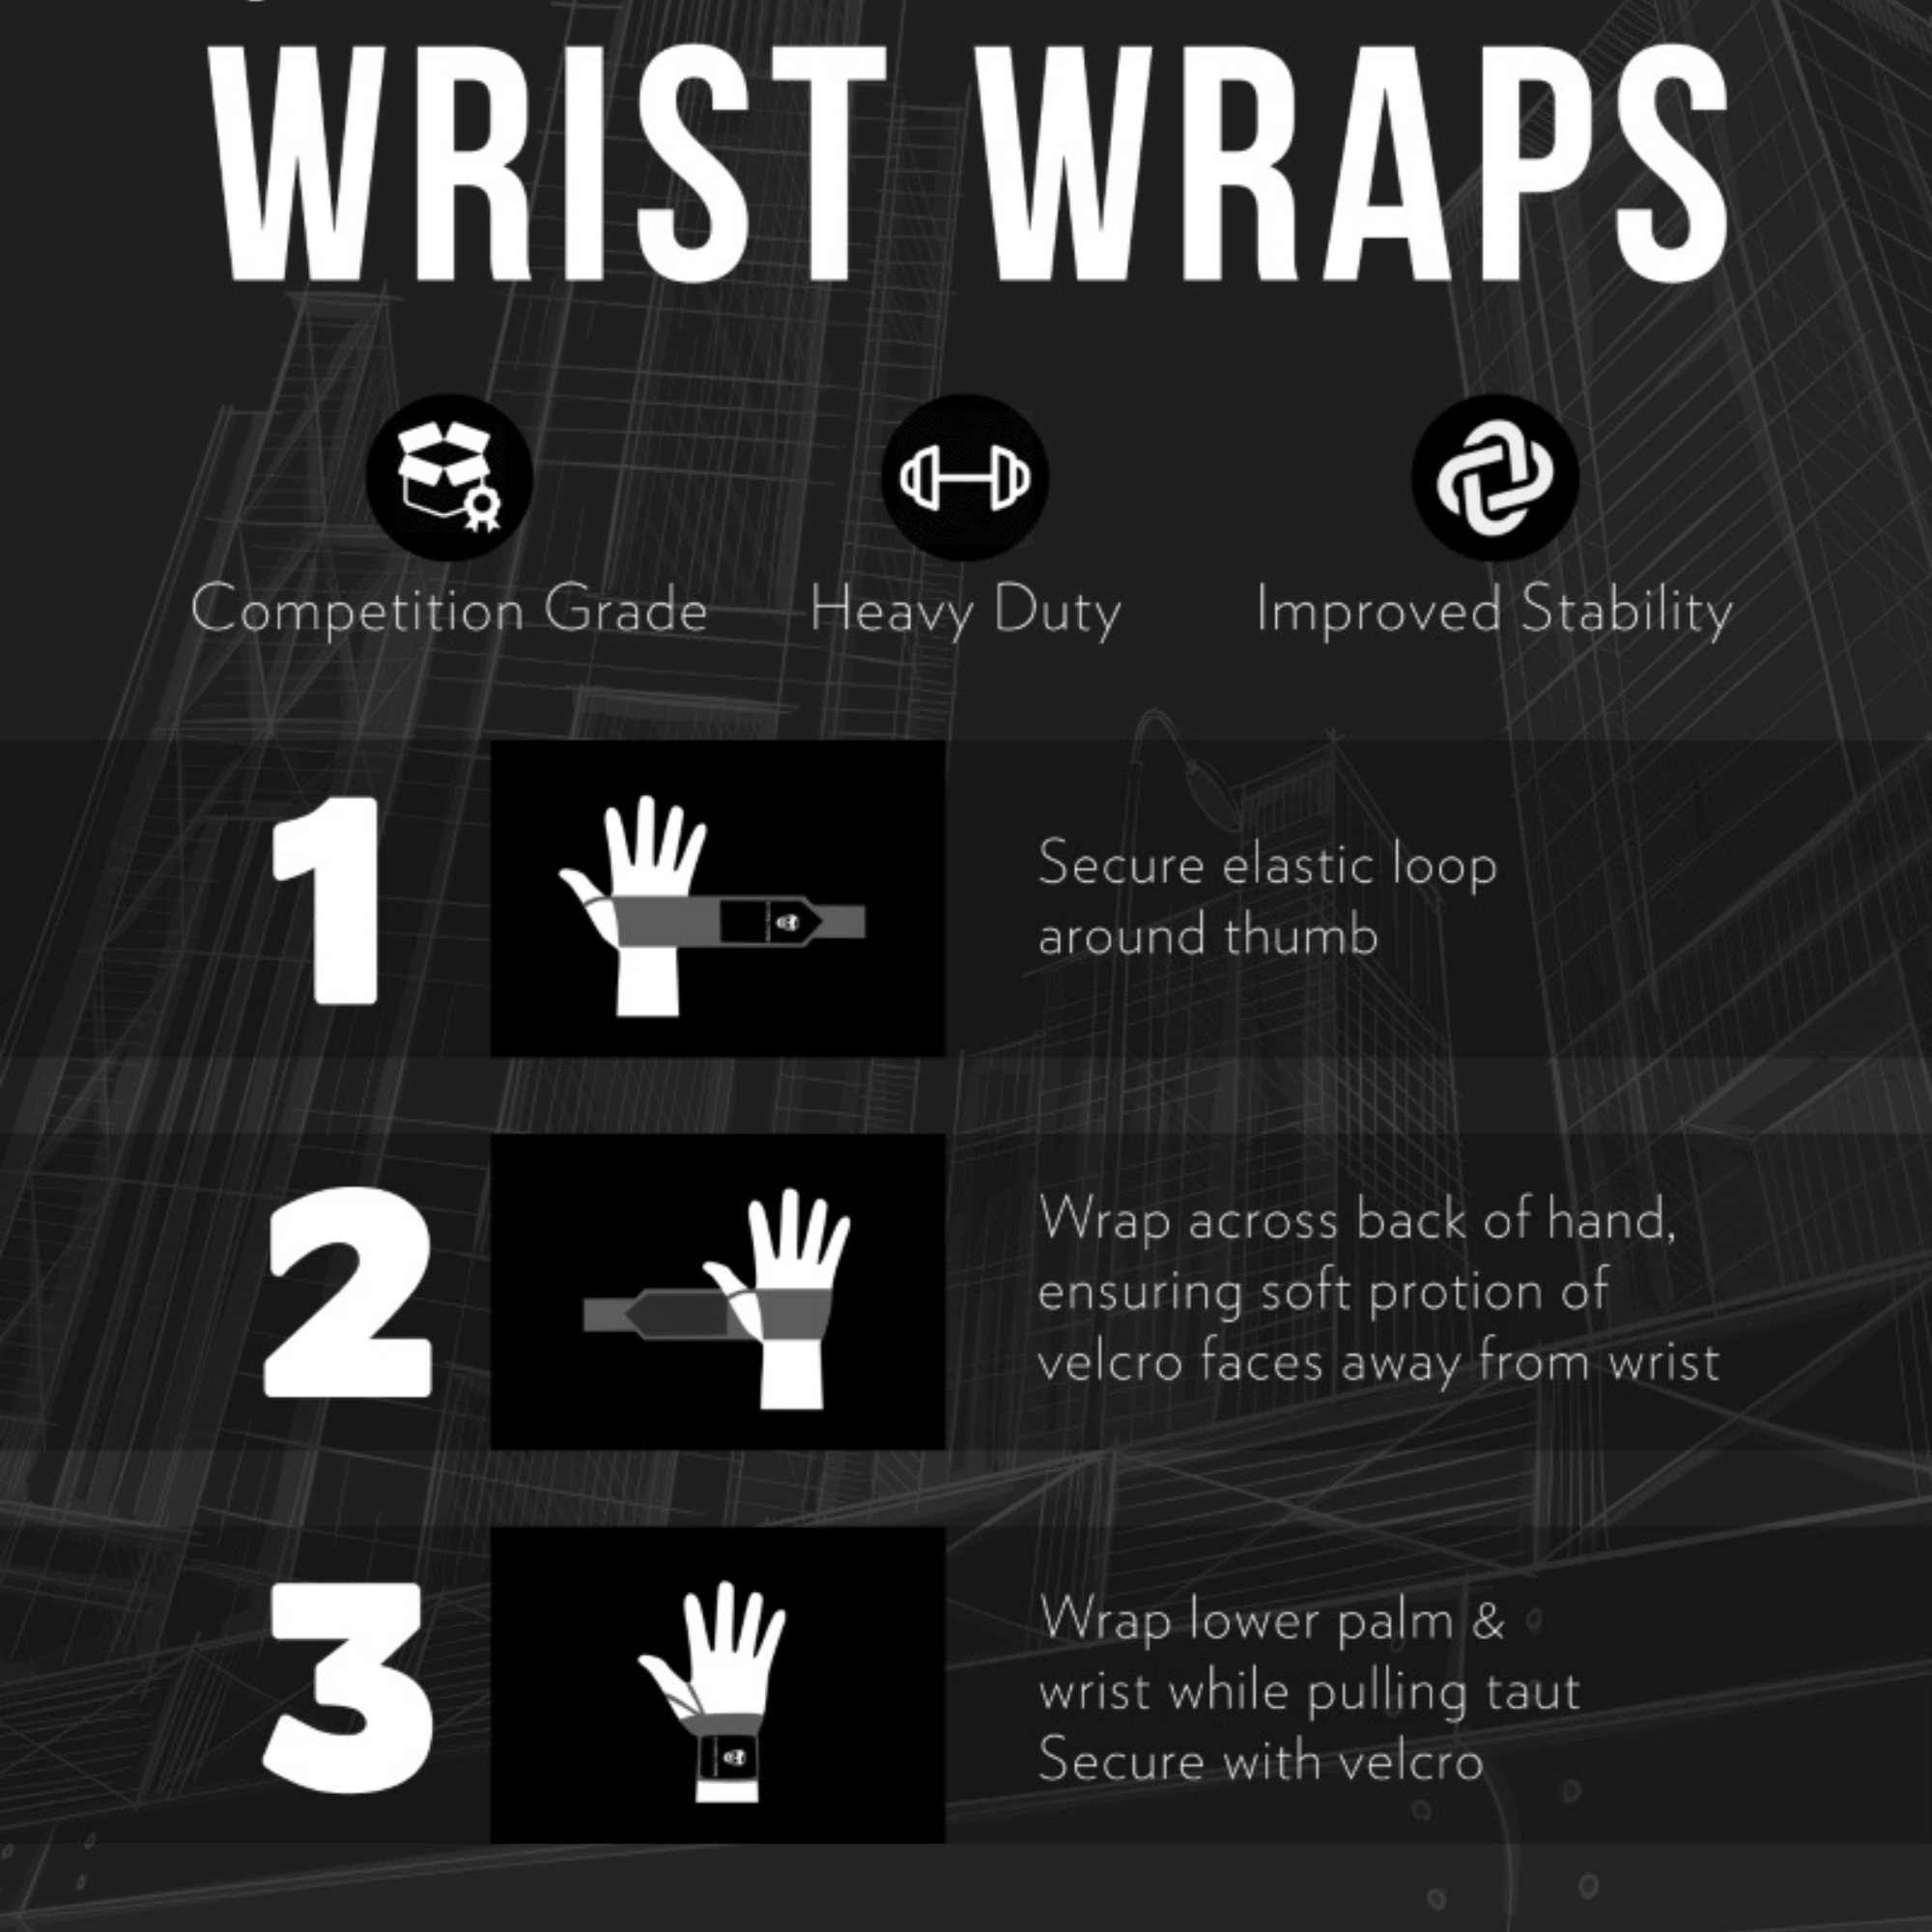 Wrist wraps how to guide.